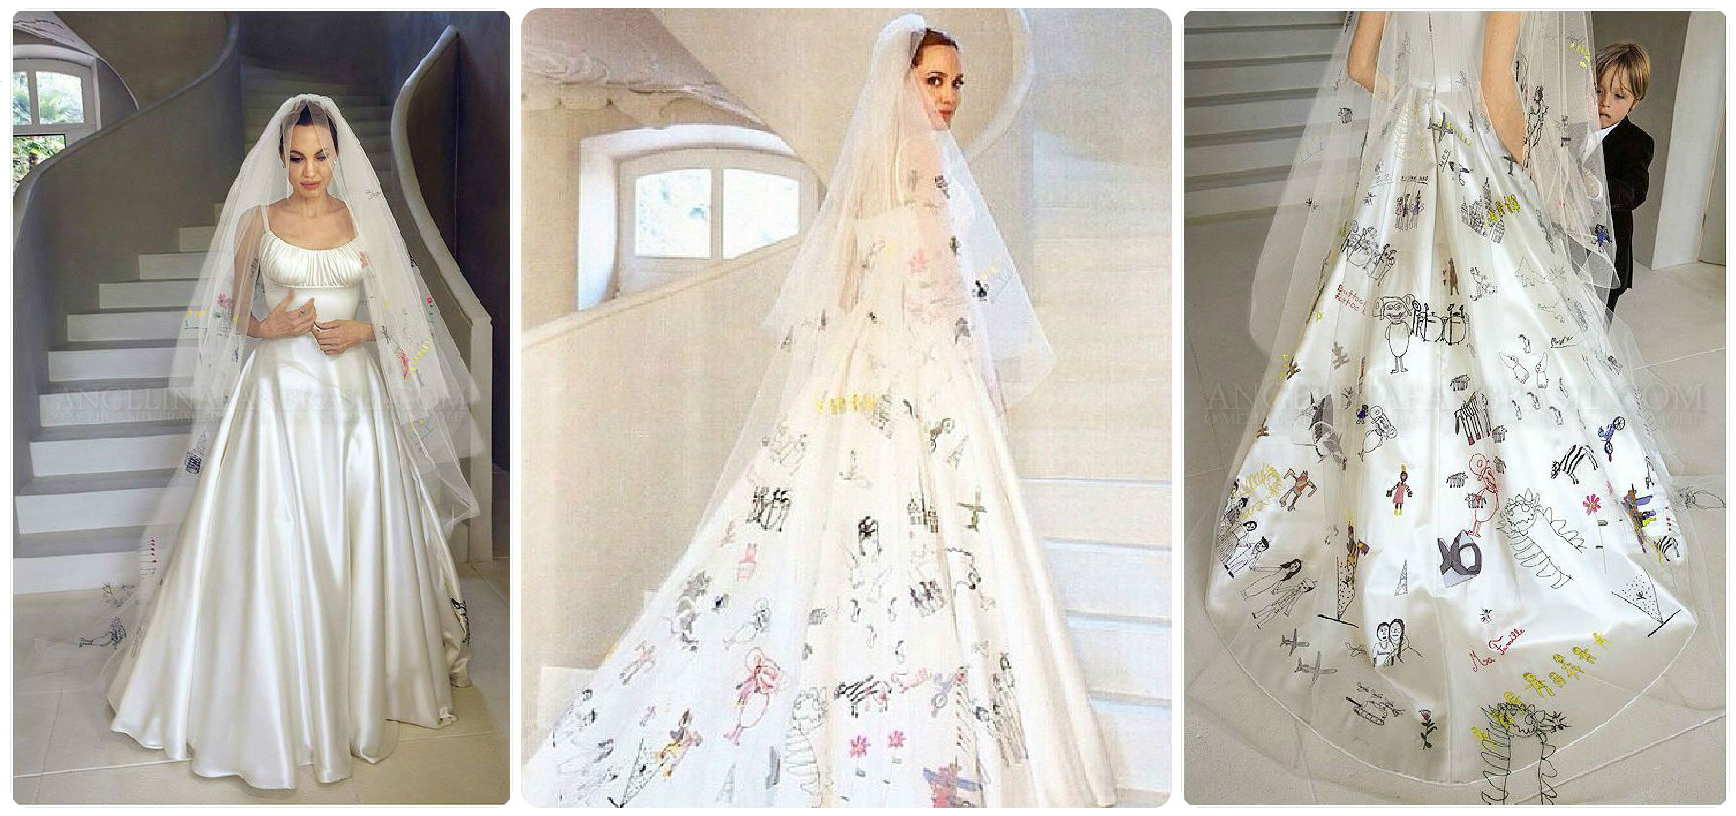 Make Your Own Customised Wedding Veil Like Angelina Jolie | Gift Ideas 